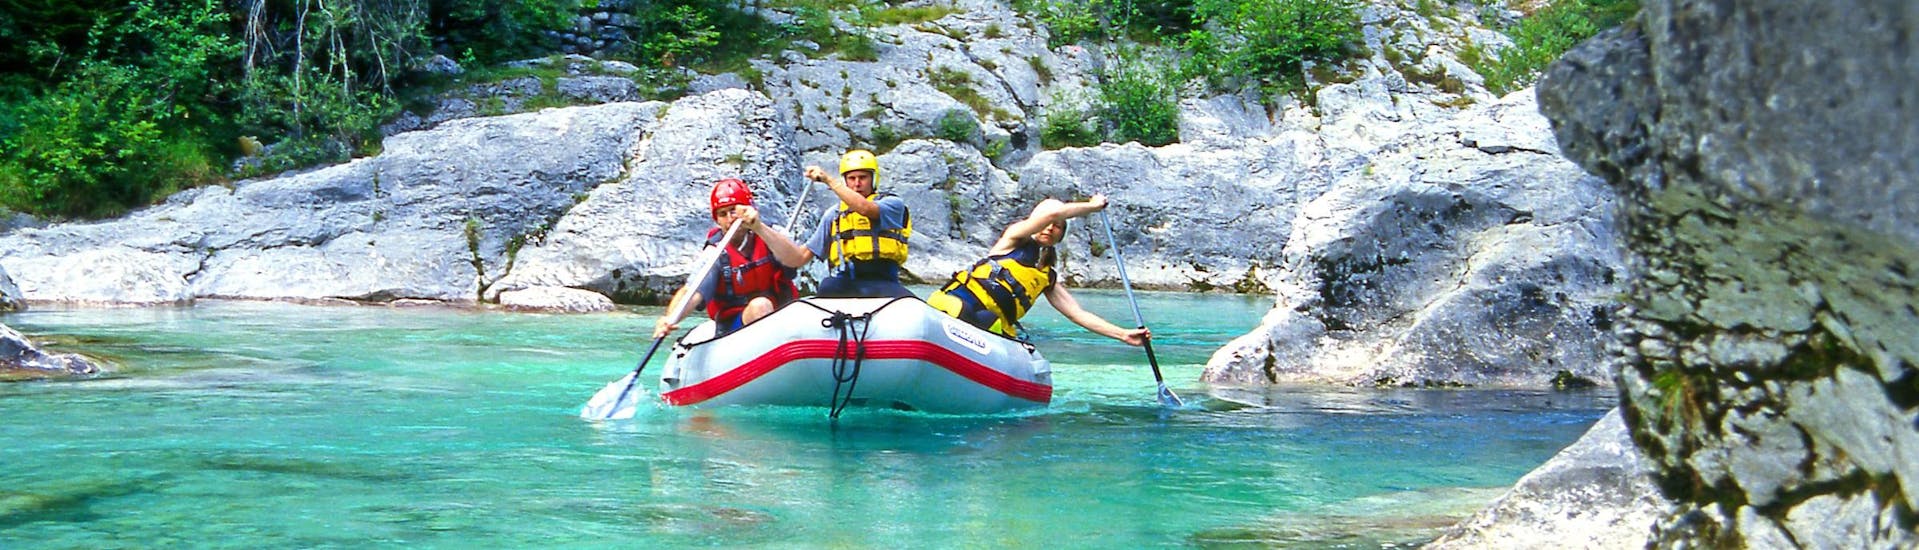 Eine Gruppe junger Menschen erfreut sich an Wildwasser Action beim Rafting & Canyoning Hotspot Učja Tal.